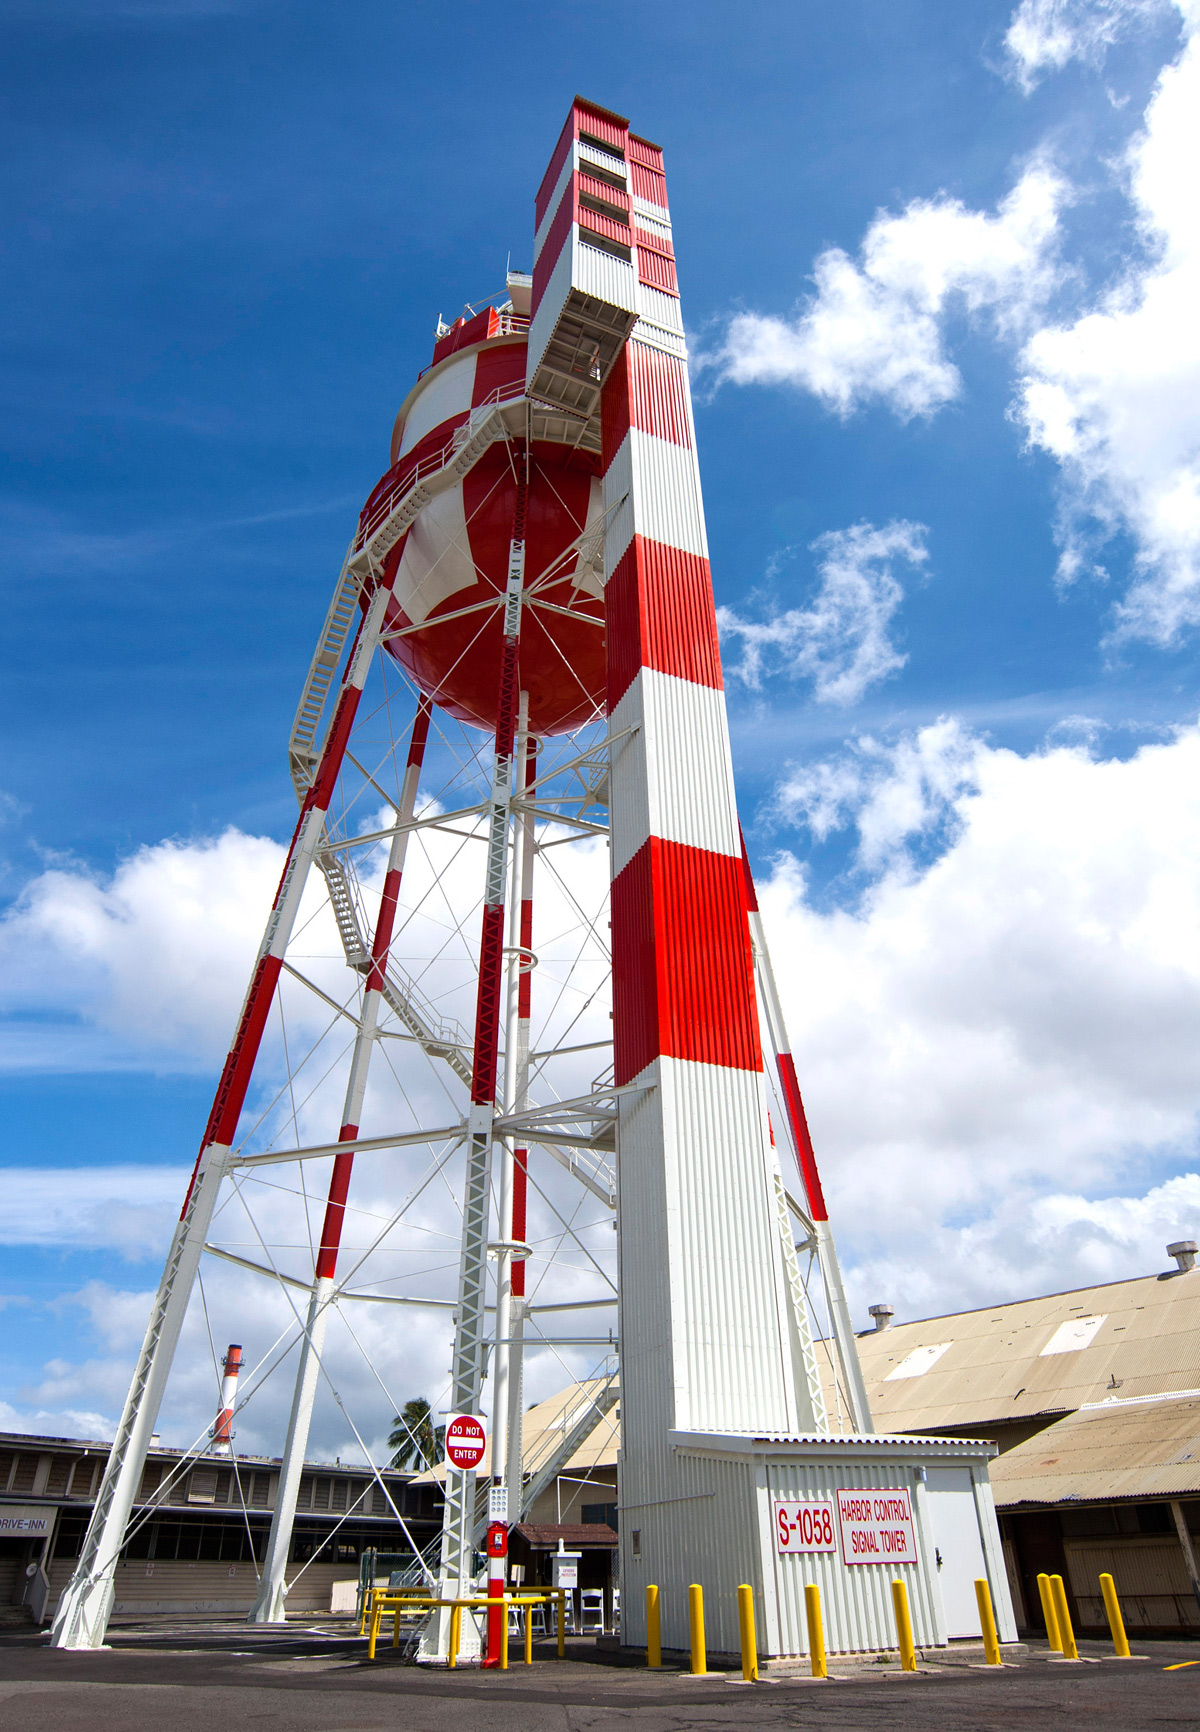 Pearl Harbor Harbor Control Tower Sherwin Williams Fluorokem Lumiflon FEVE Resin